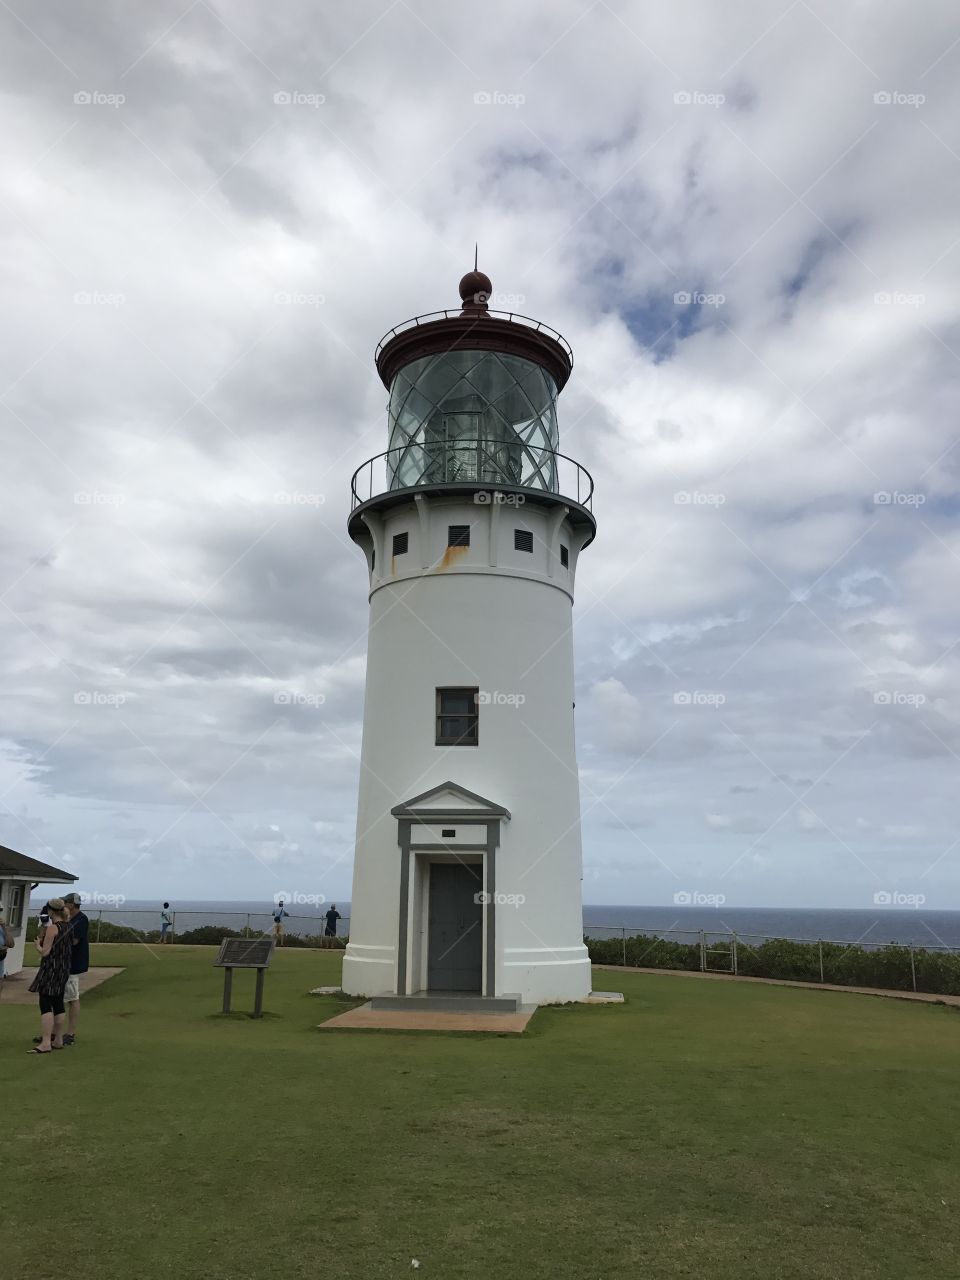 Kilauea Lighthouse 2